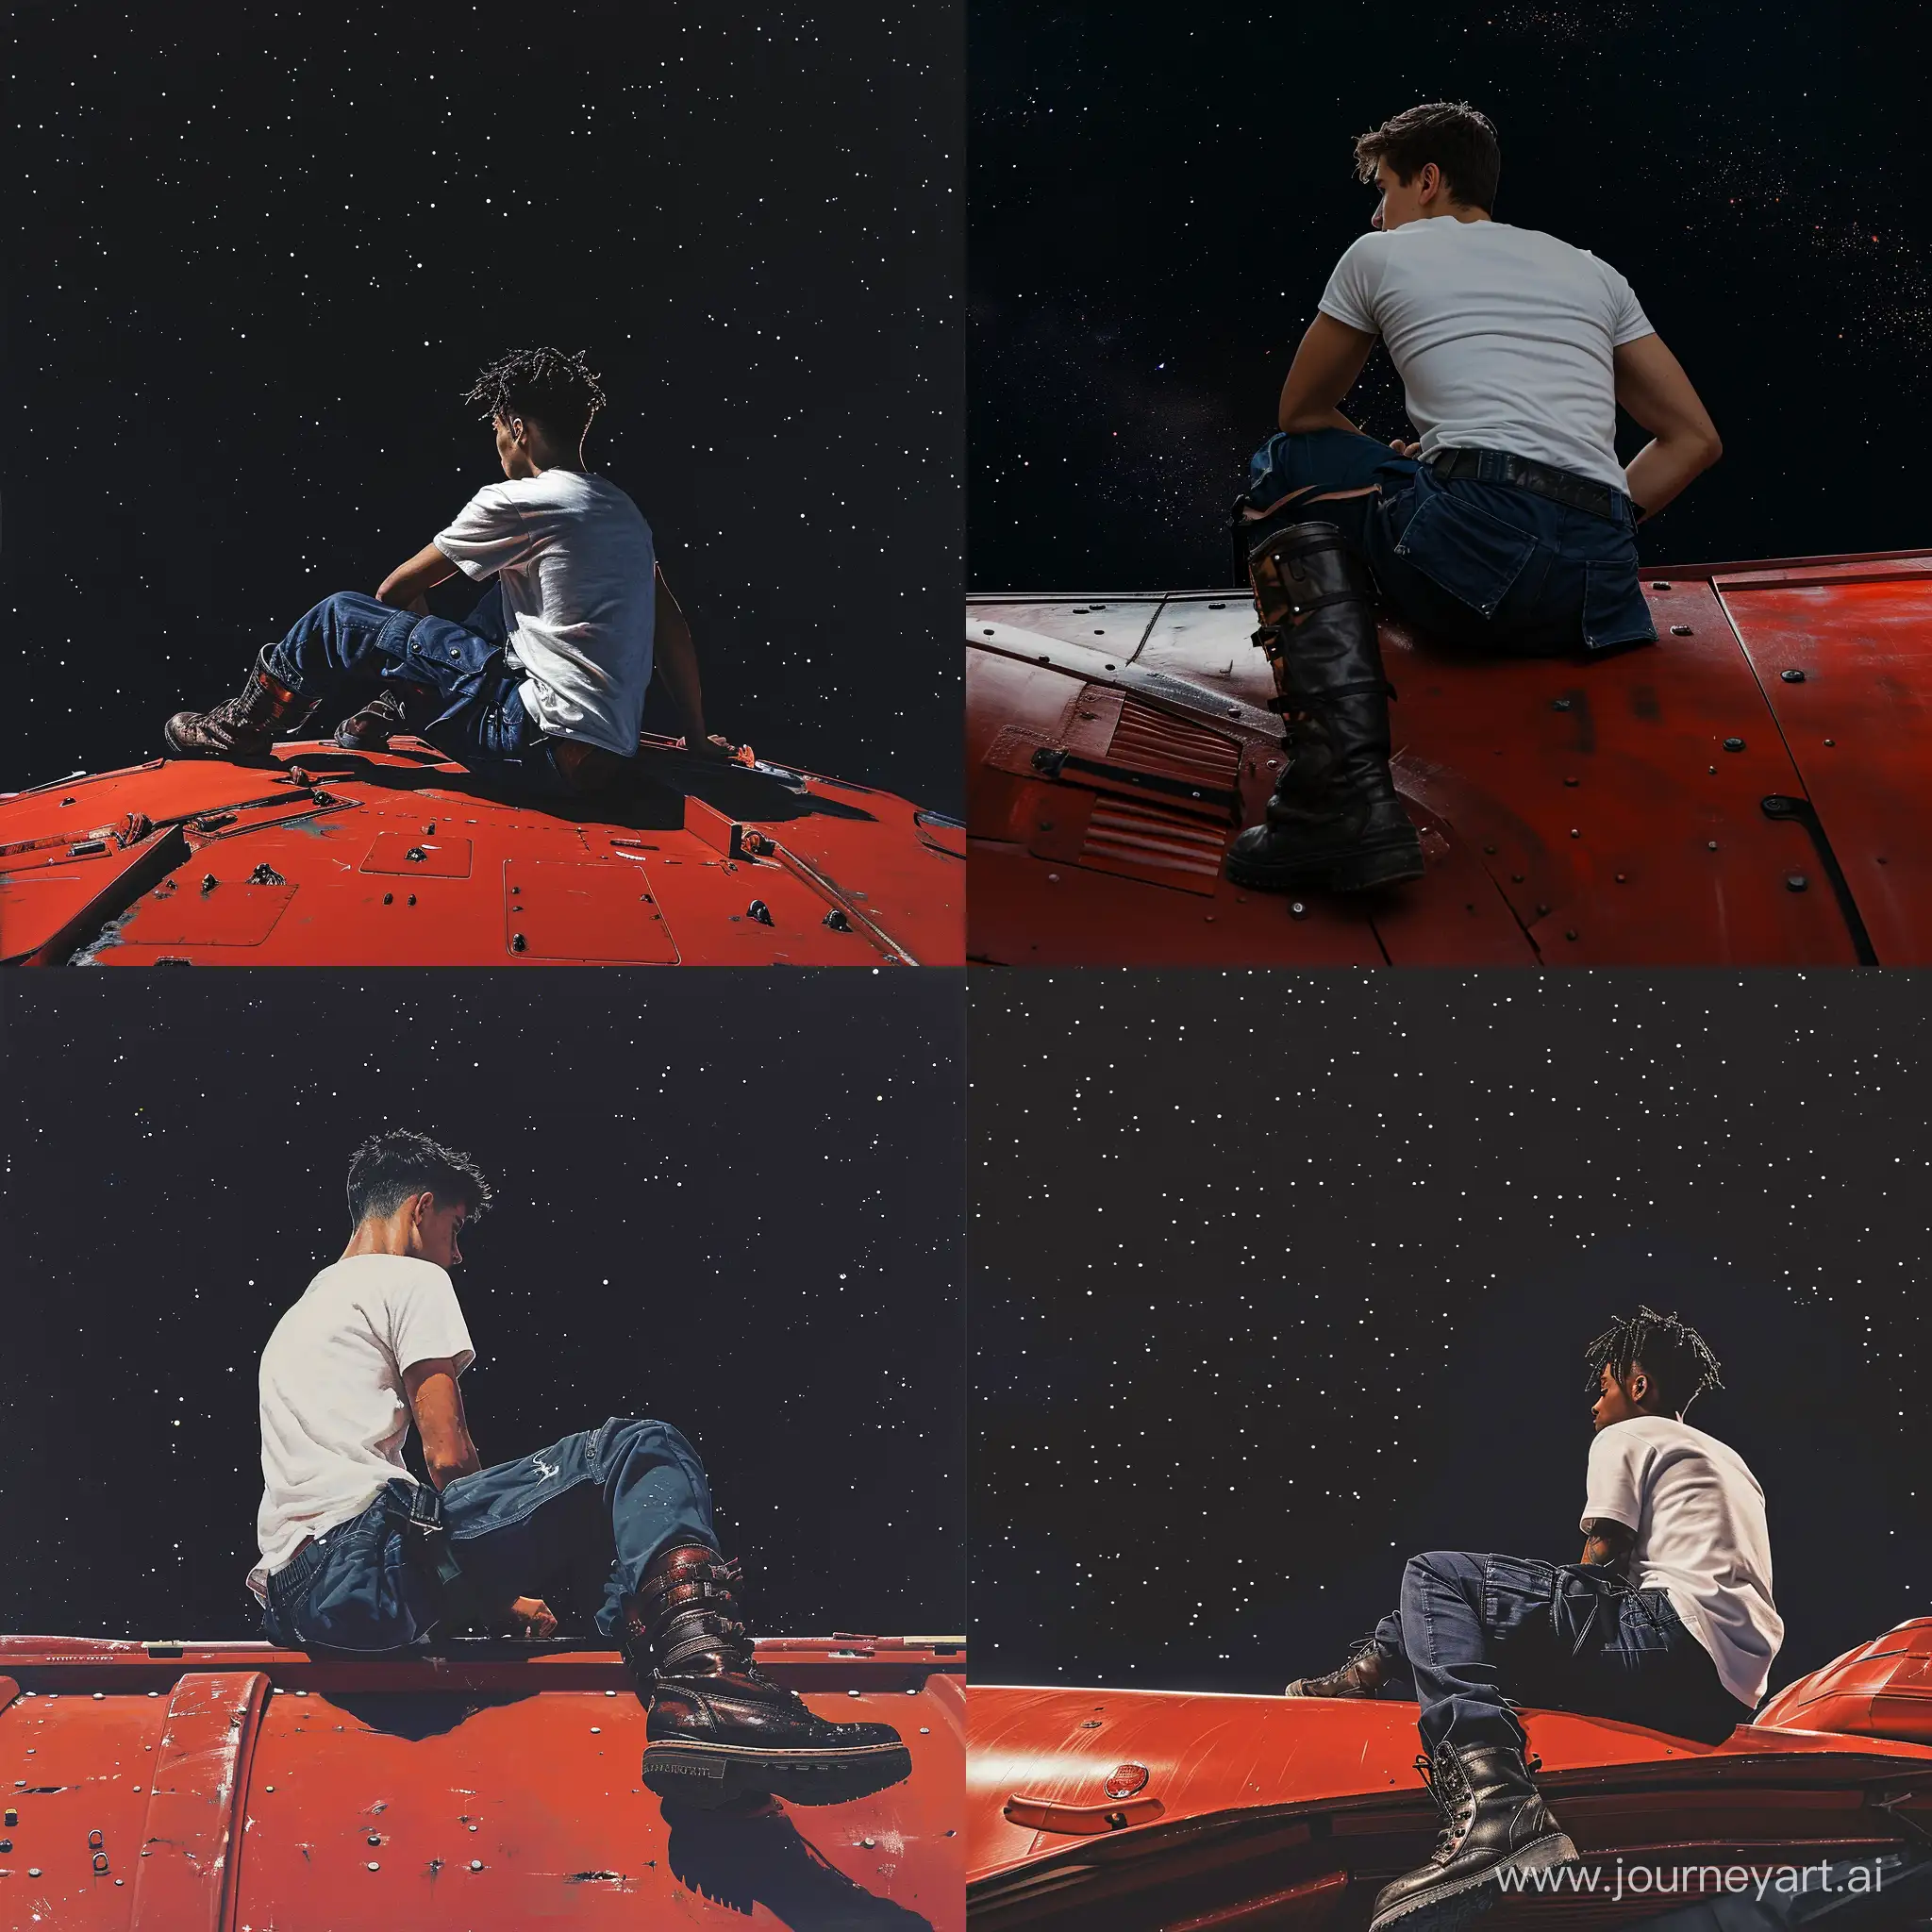 Futuristic-Night-Sky-Gazing-Young-Man-on-Red-Ship